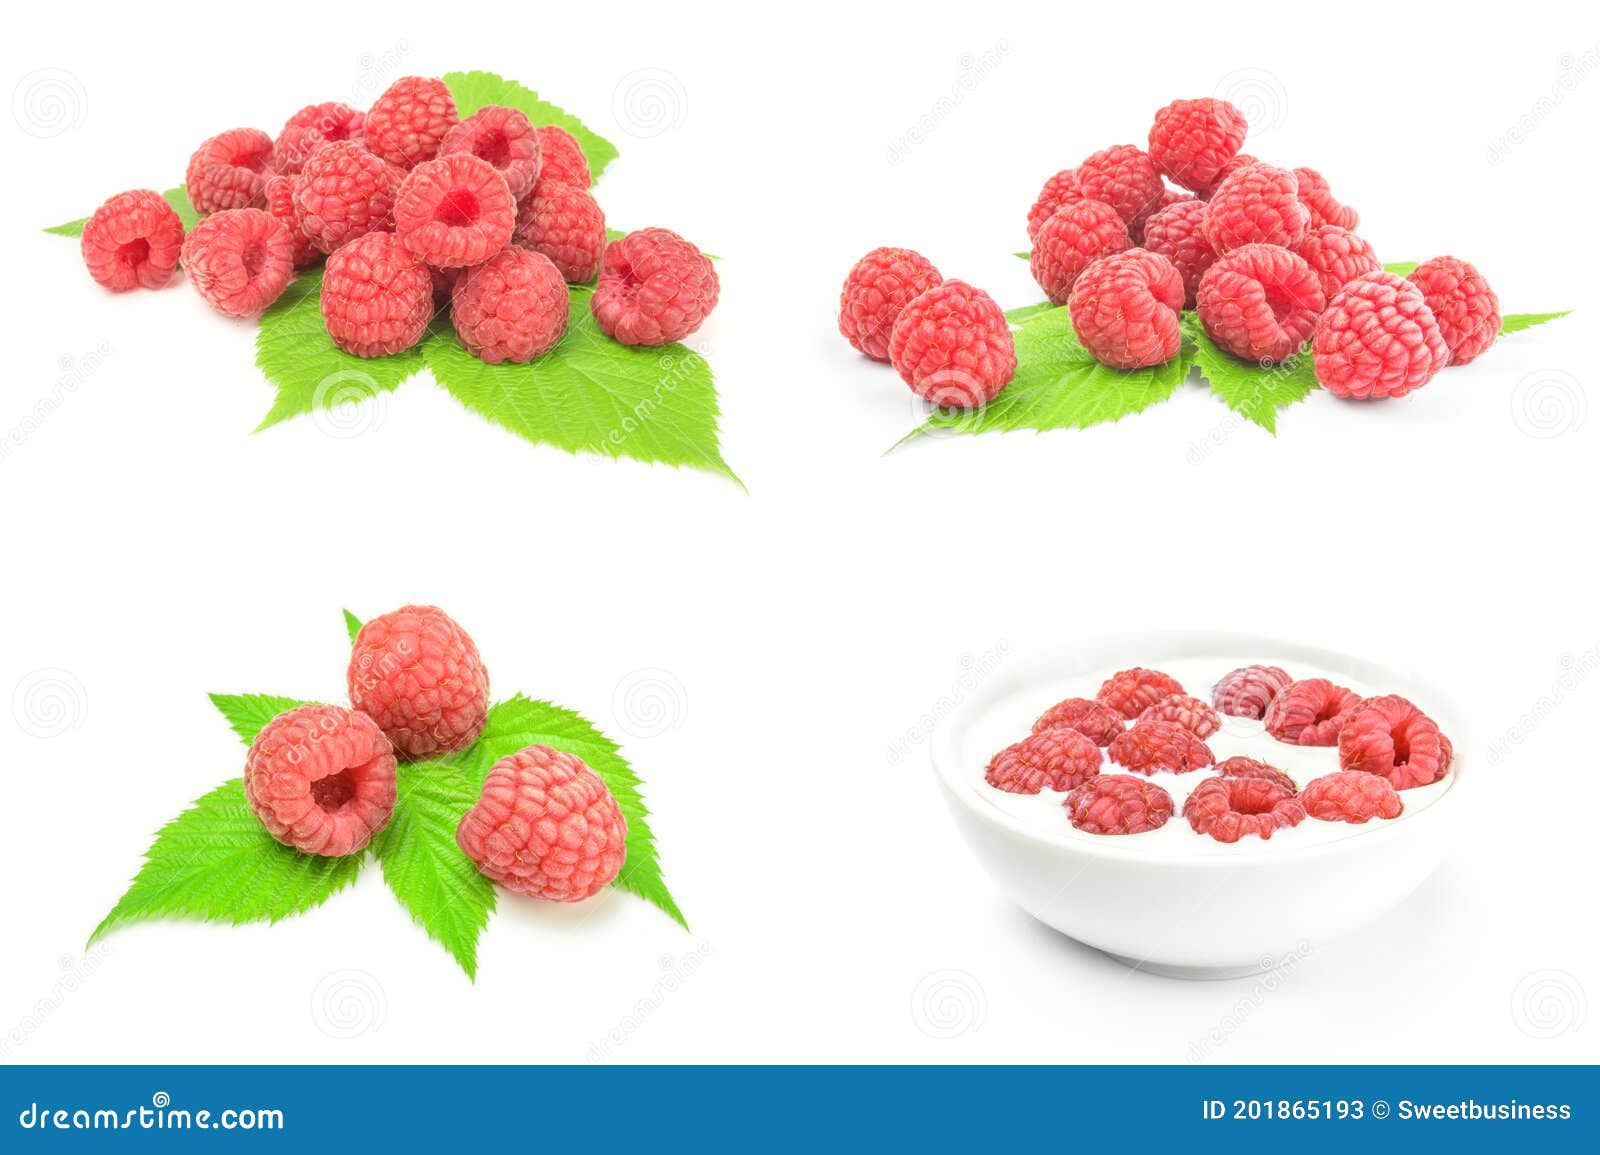 set of rubusberry  on white